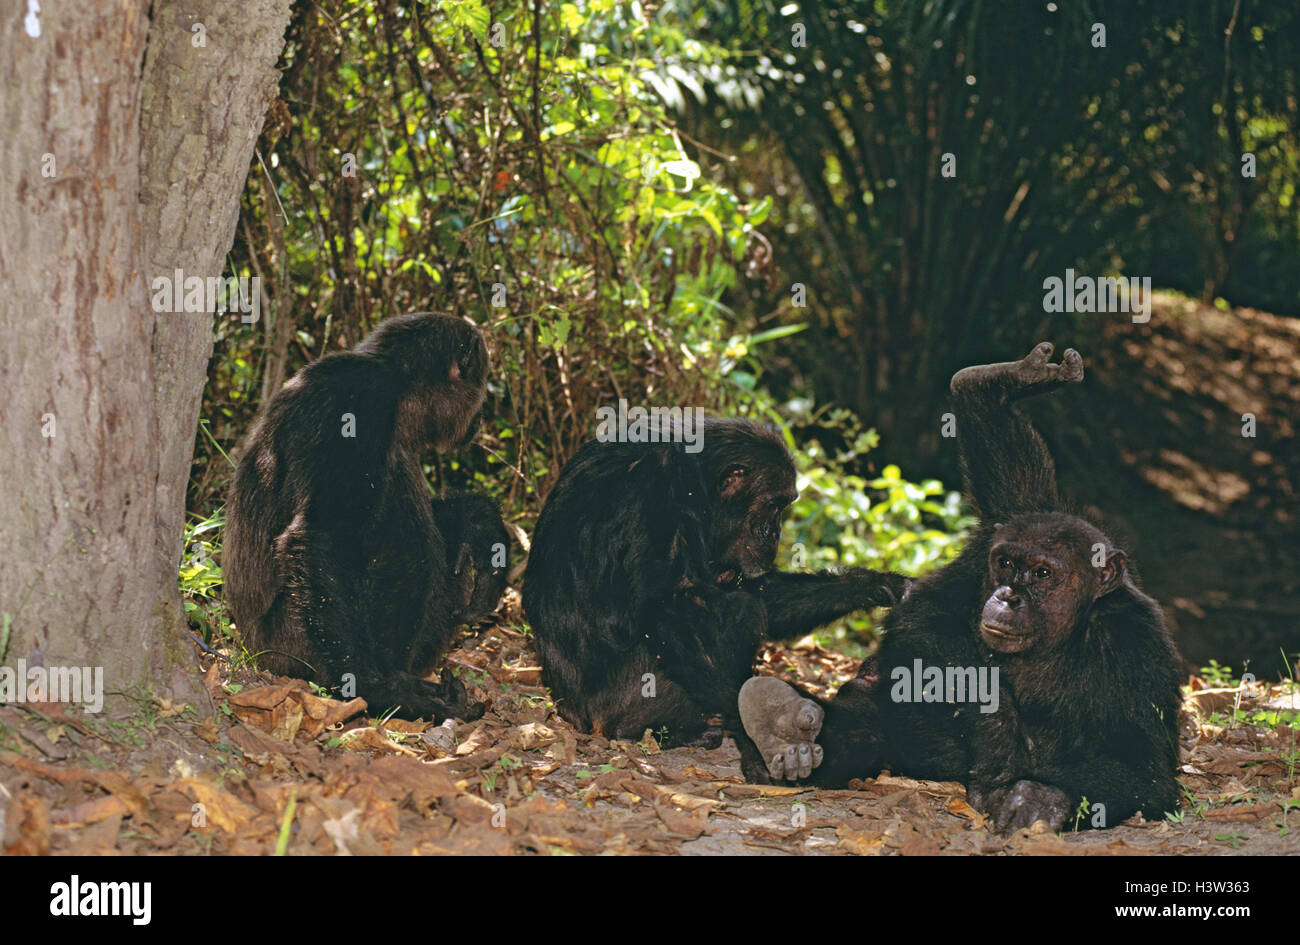 Common chimpanzee (Pan troglodytes schweinfurthii) Stock Photo